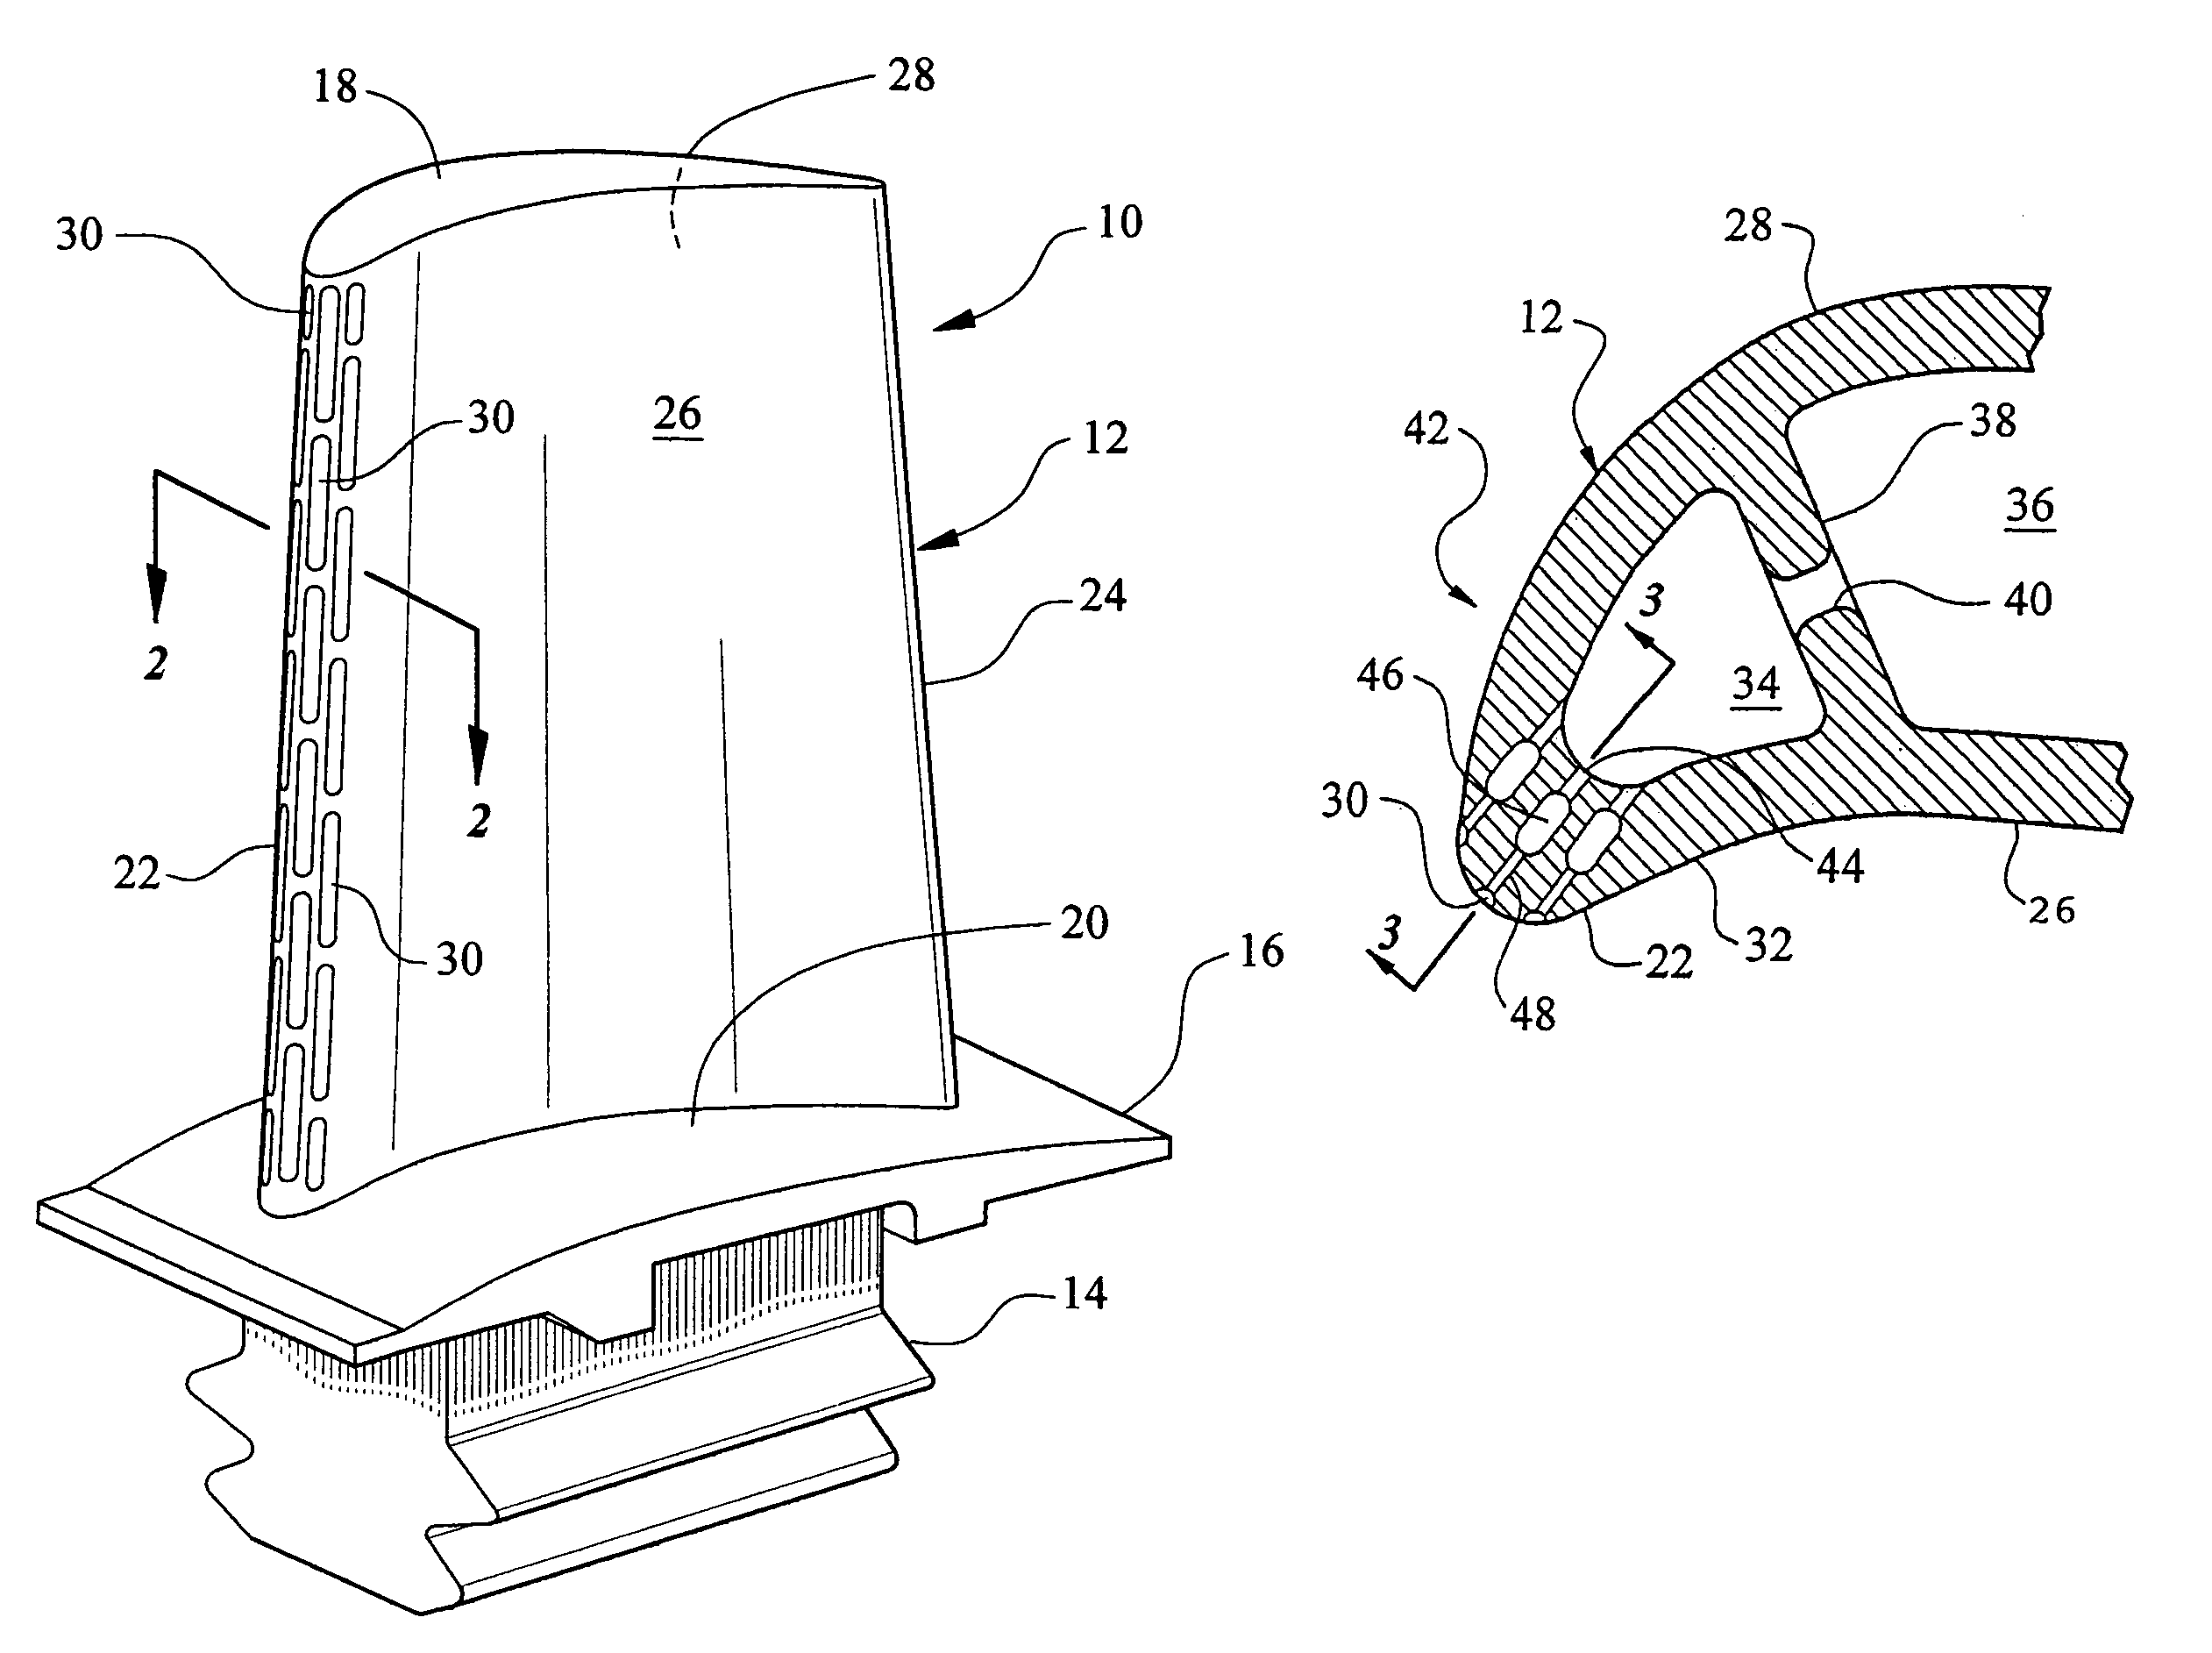 Leading edge diffusion cooling of a turbine airfoil for a gas turbine engine